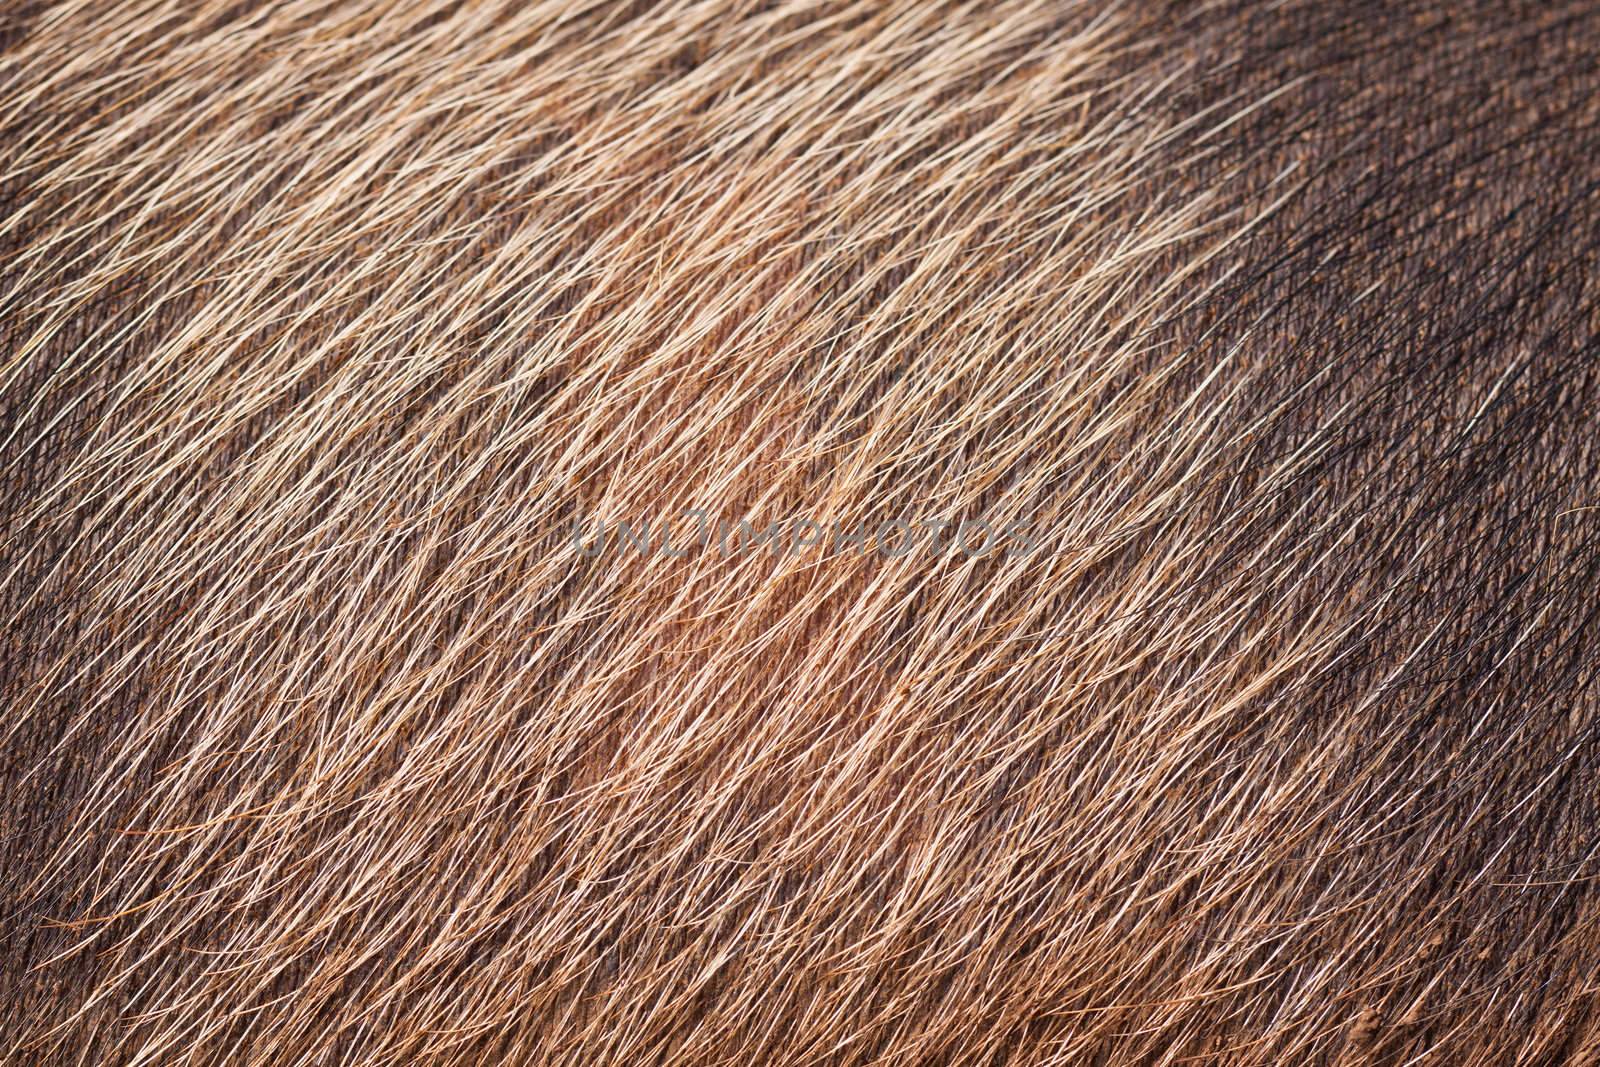 Closeup of pig skin and hair by Jaykayl